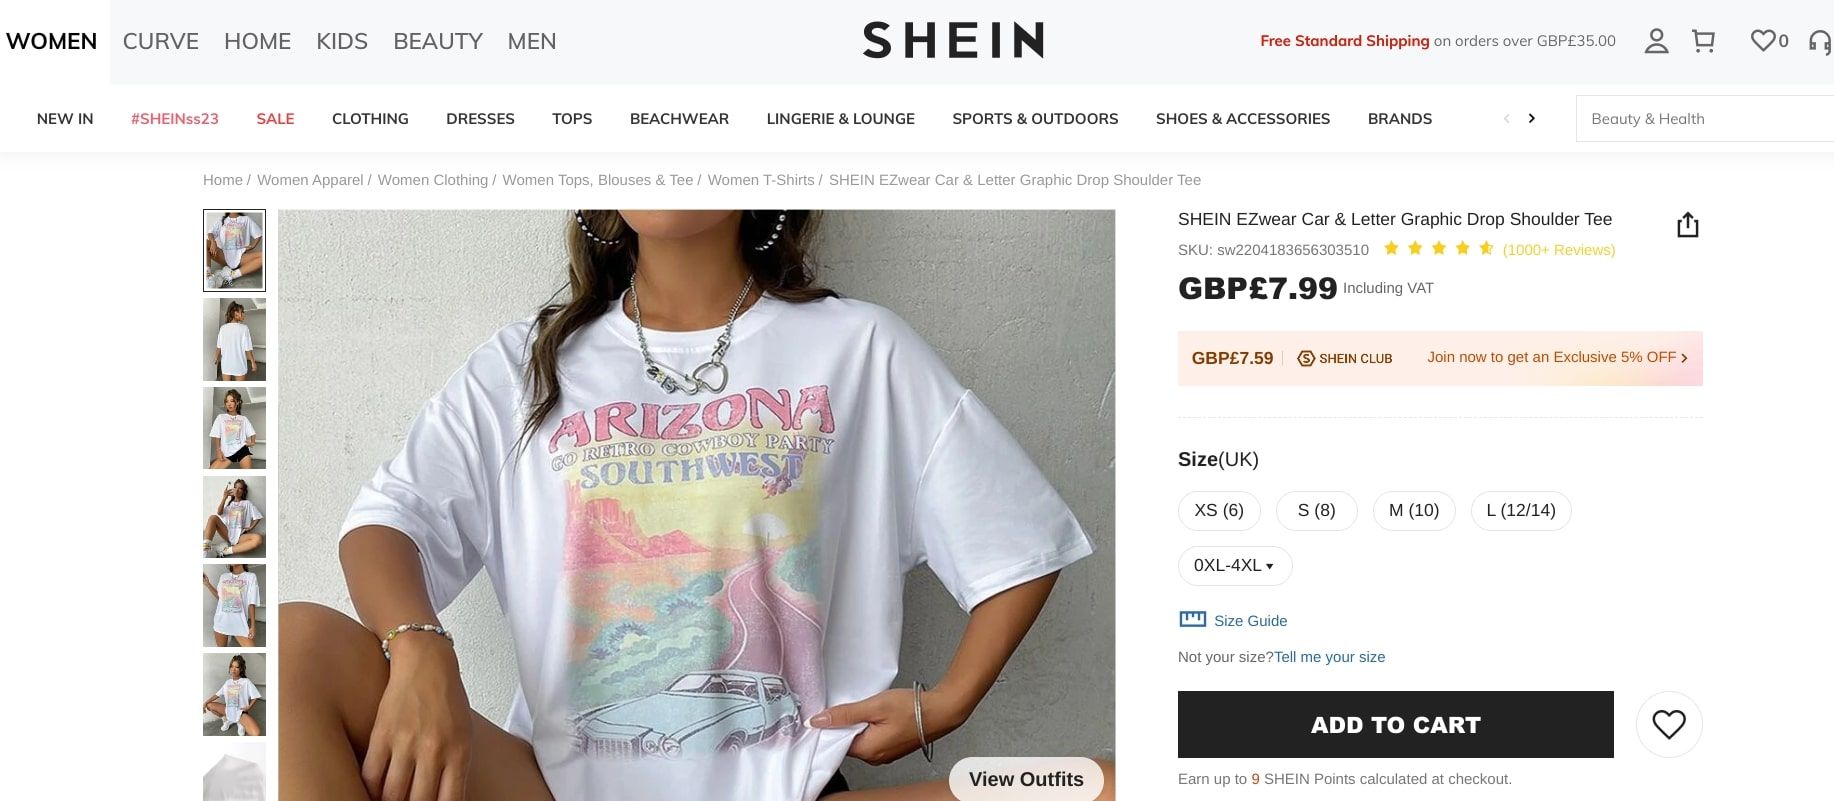 Shein Shopping Haul: Honest Shein Curve Reviews & Tips